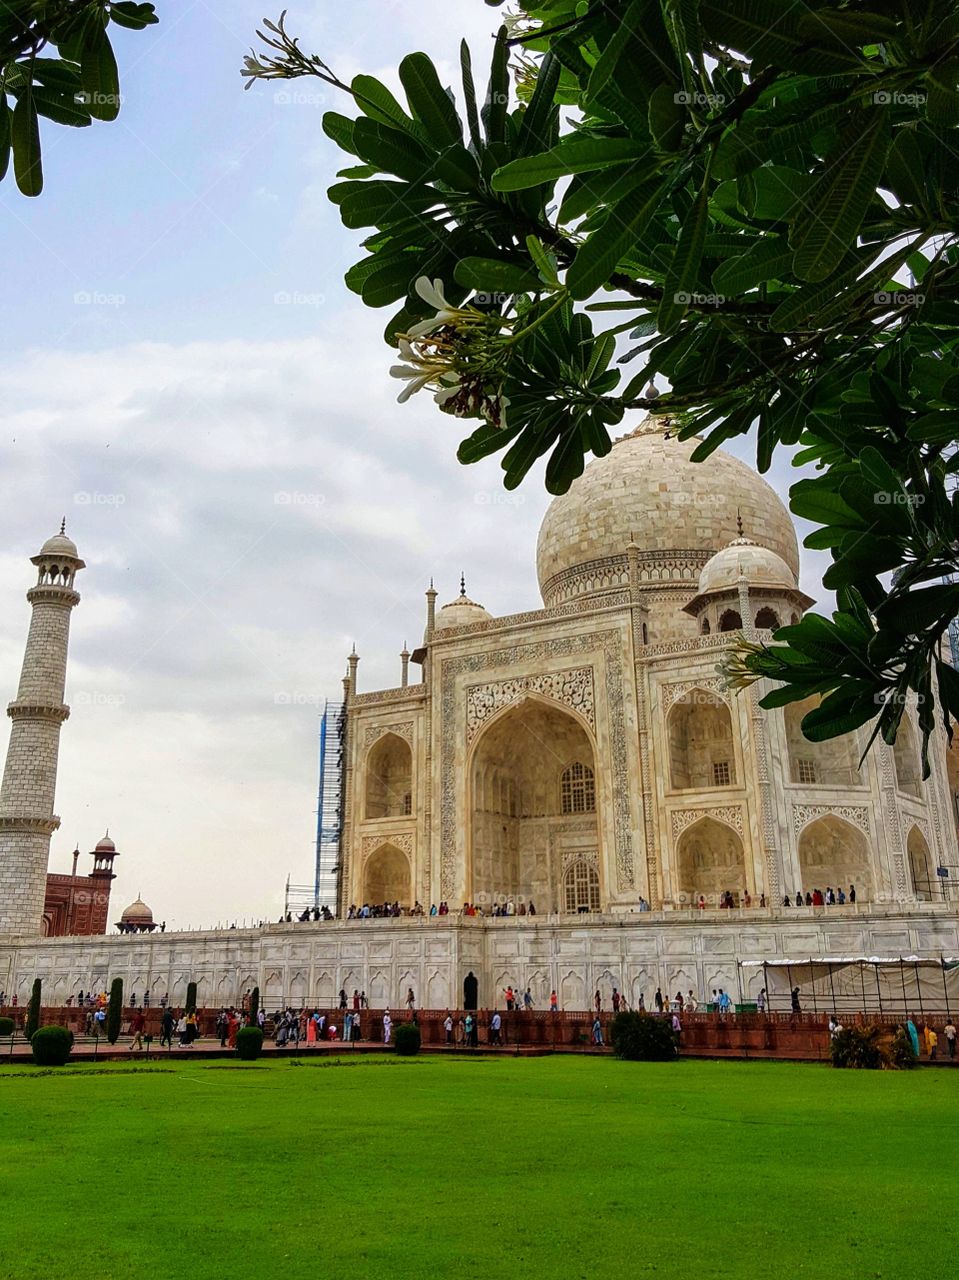 Wonder of India, the Taj Mahal